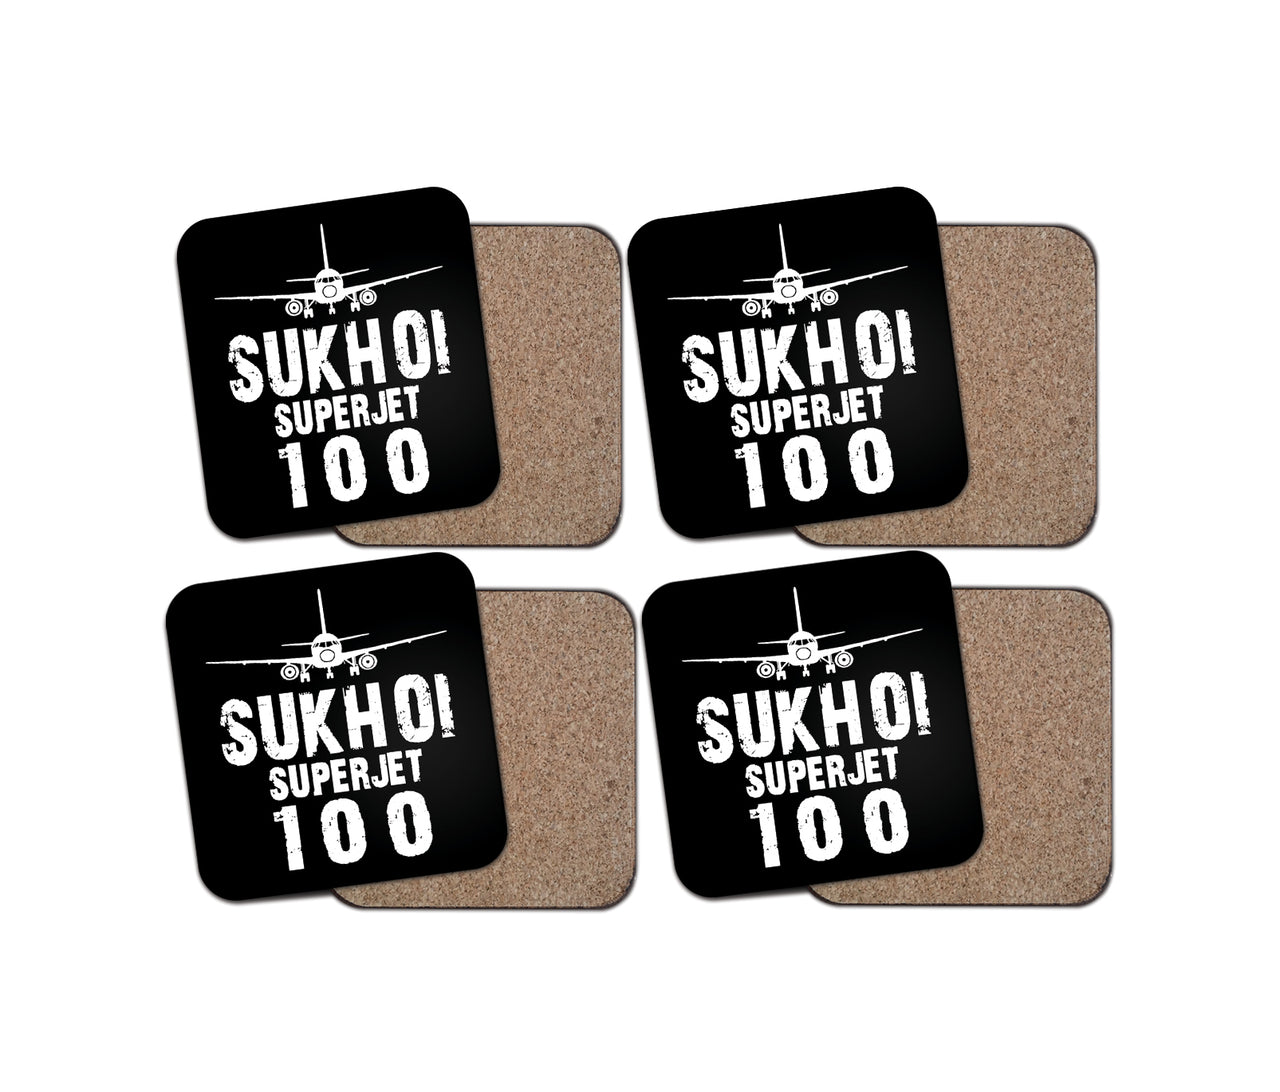 Sukhoi Superjet 100 & Plane Designed Coasters